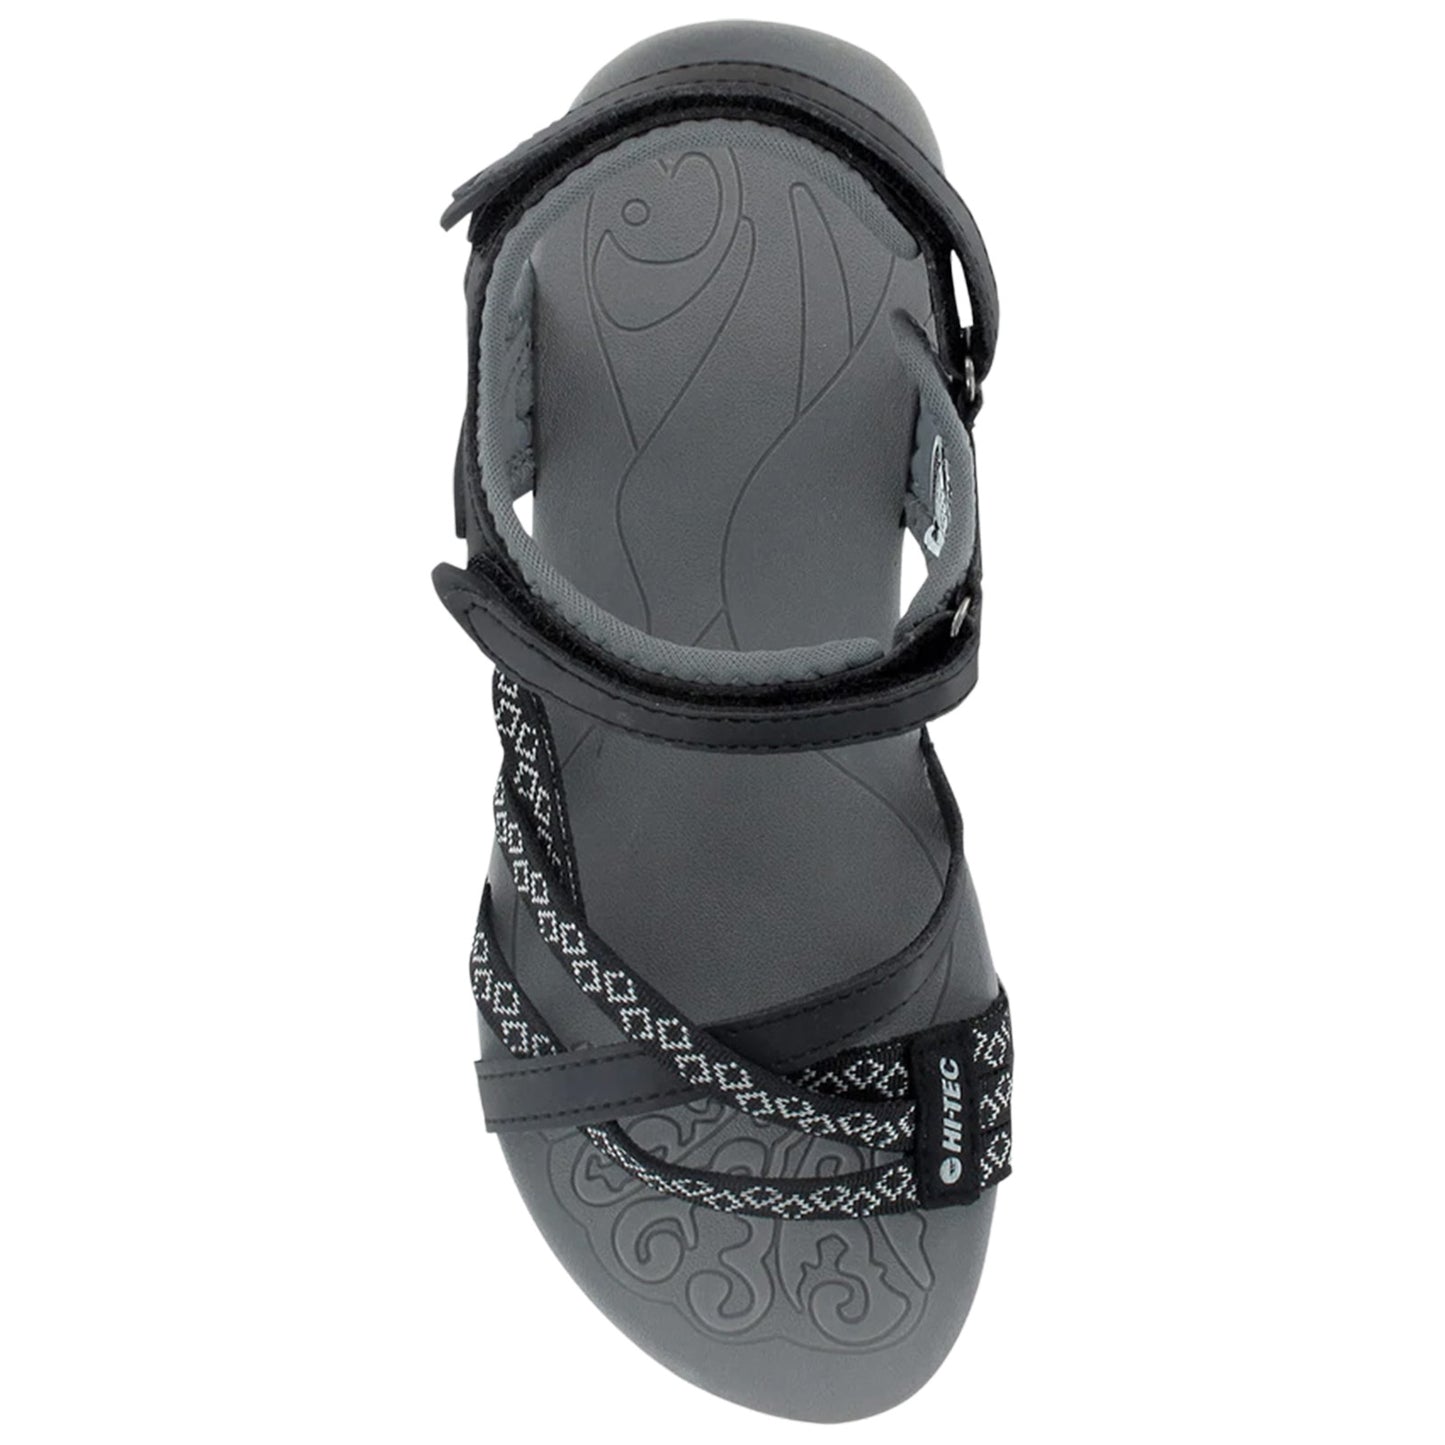 II Savanna Sports Ladies Sandals – More Walking Hi-Tec